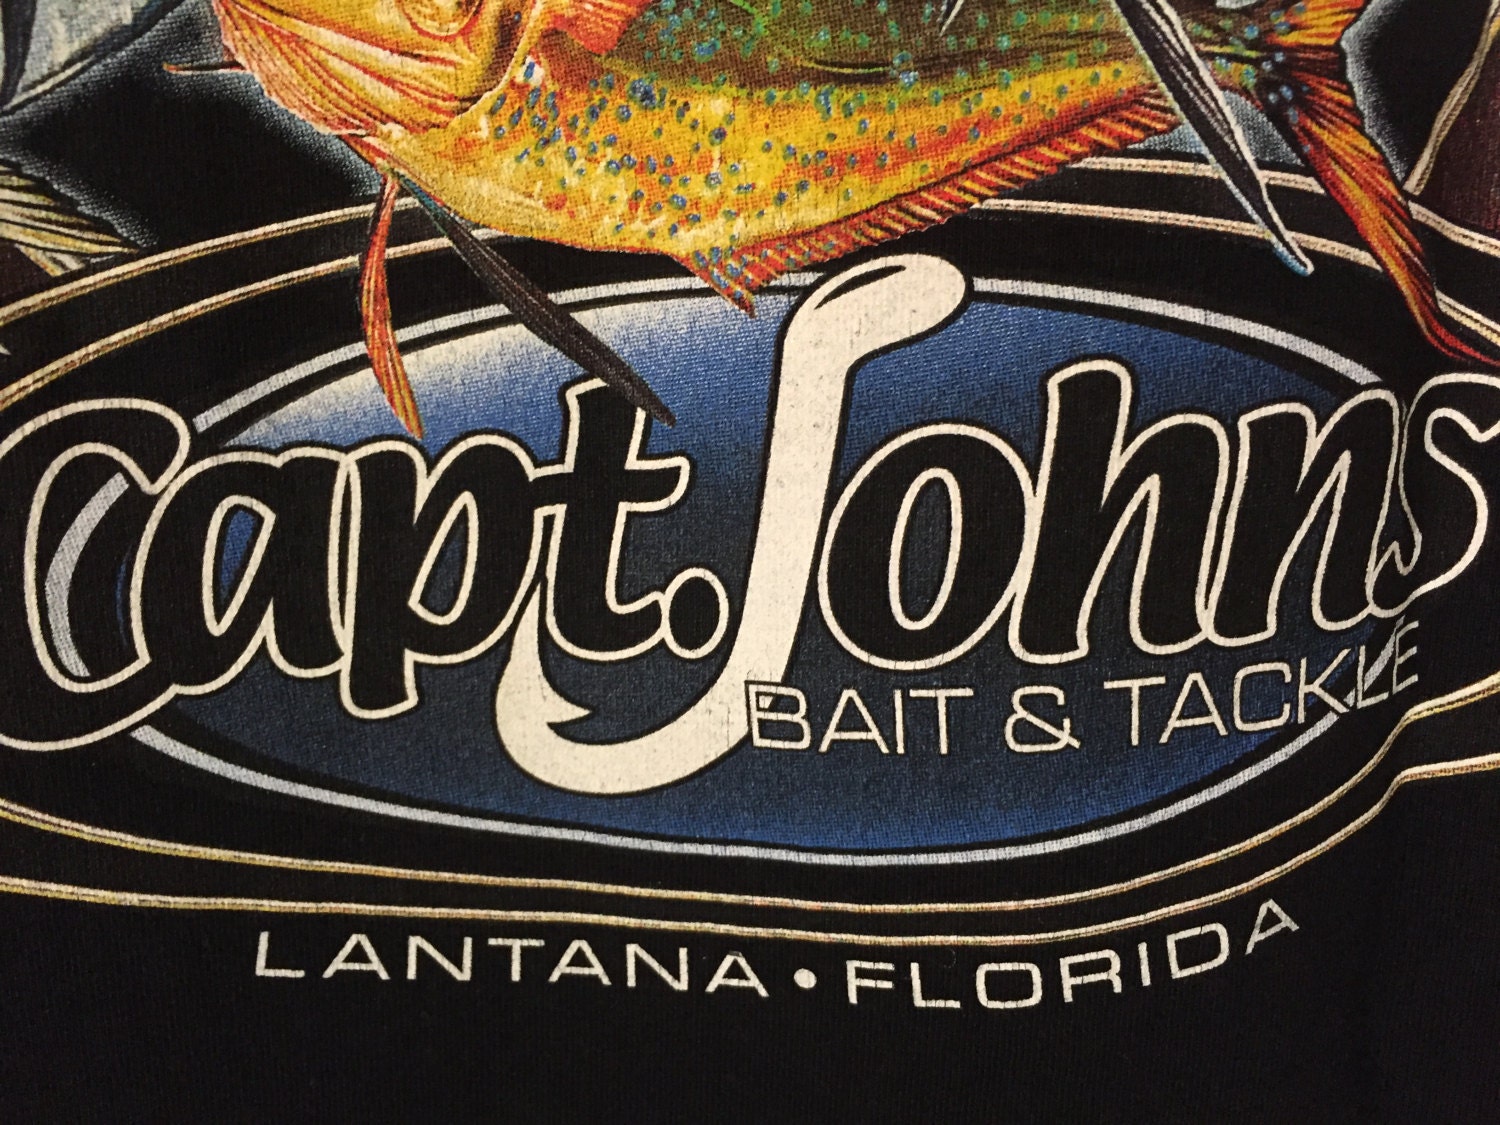 Capt. Johns Bait & Tackle Lantana, Florida- Pocket Tee- T Shirt adult XL Y